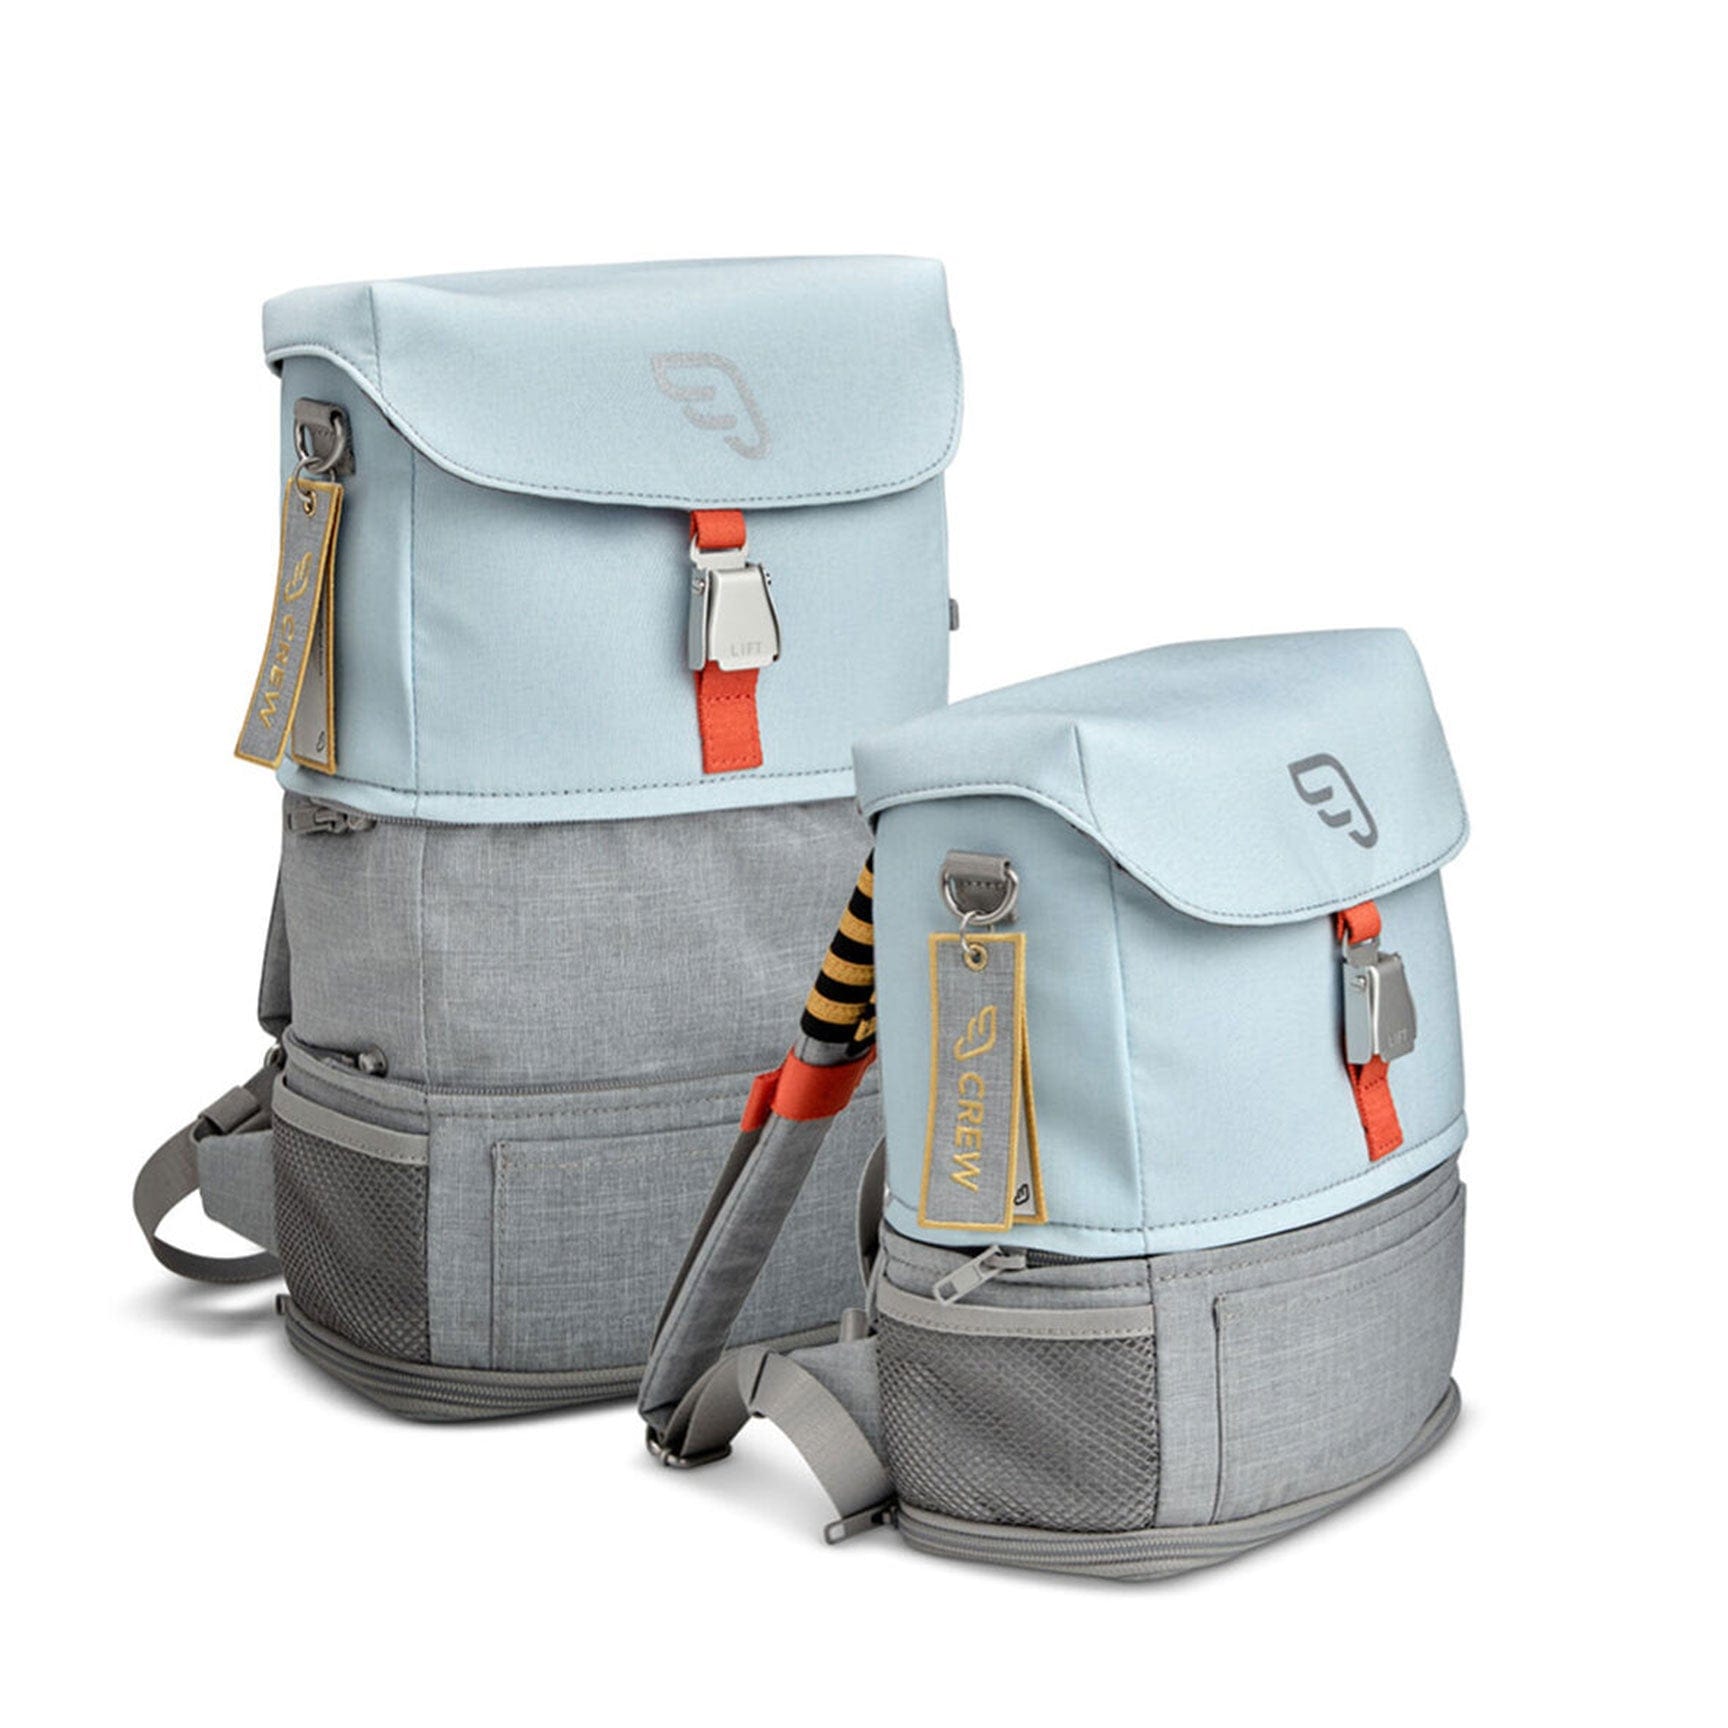 Stokke Jetkids Travel Bundle in Blue/Blue Crew Backpack Buggy & Ride-On Boards 570601 7040355706014